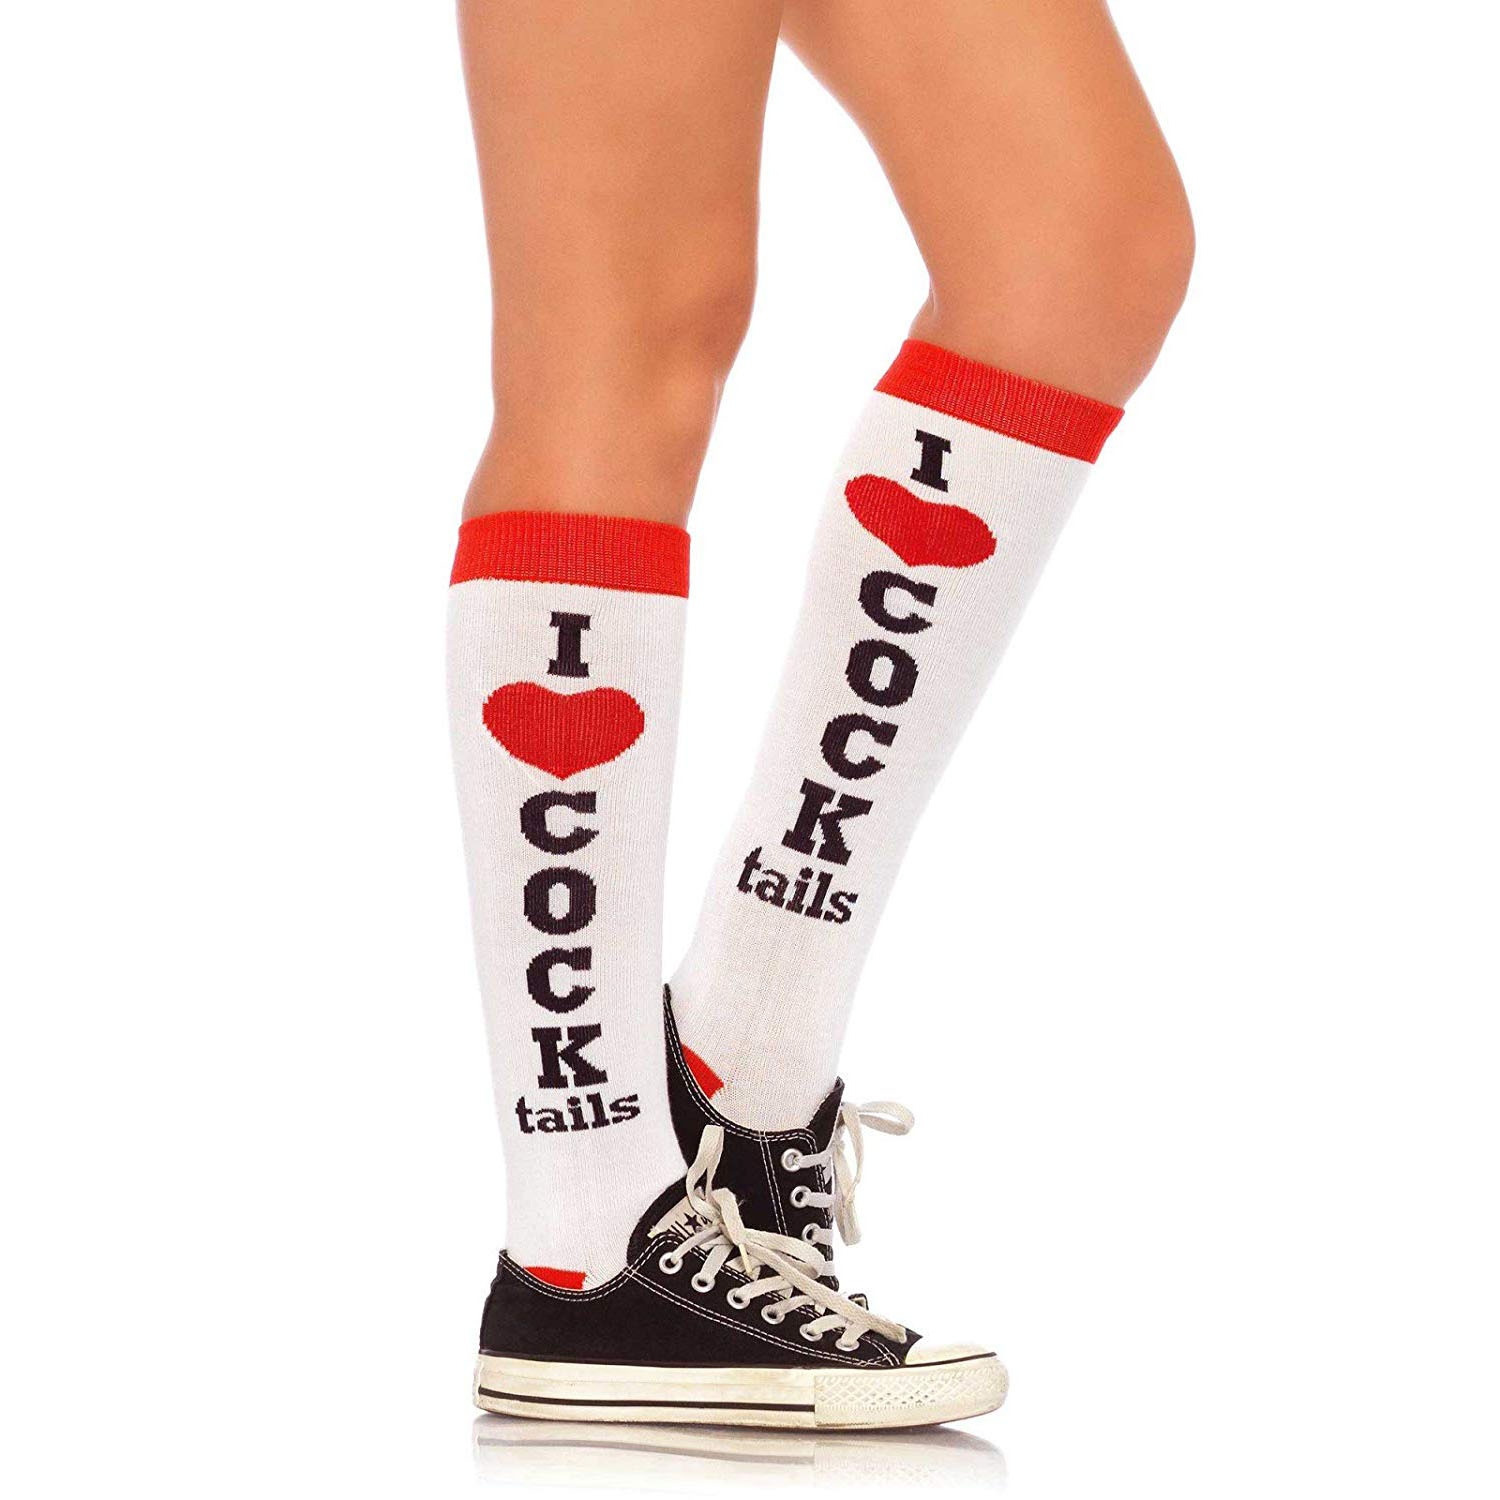 I Love Cock Tails Socks